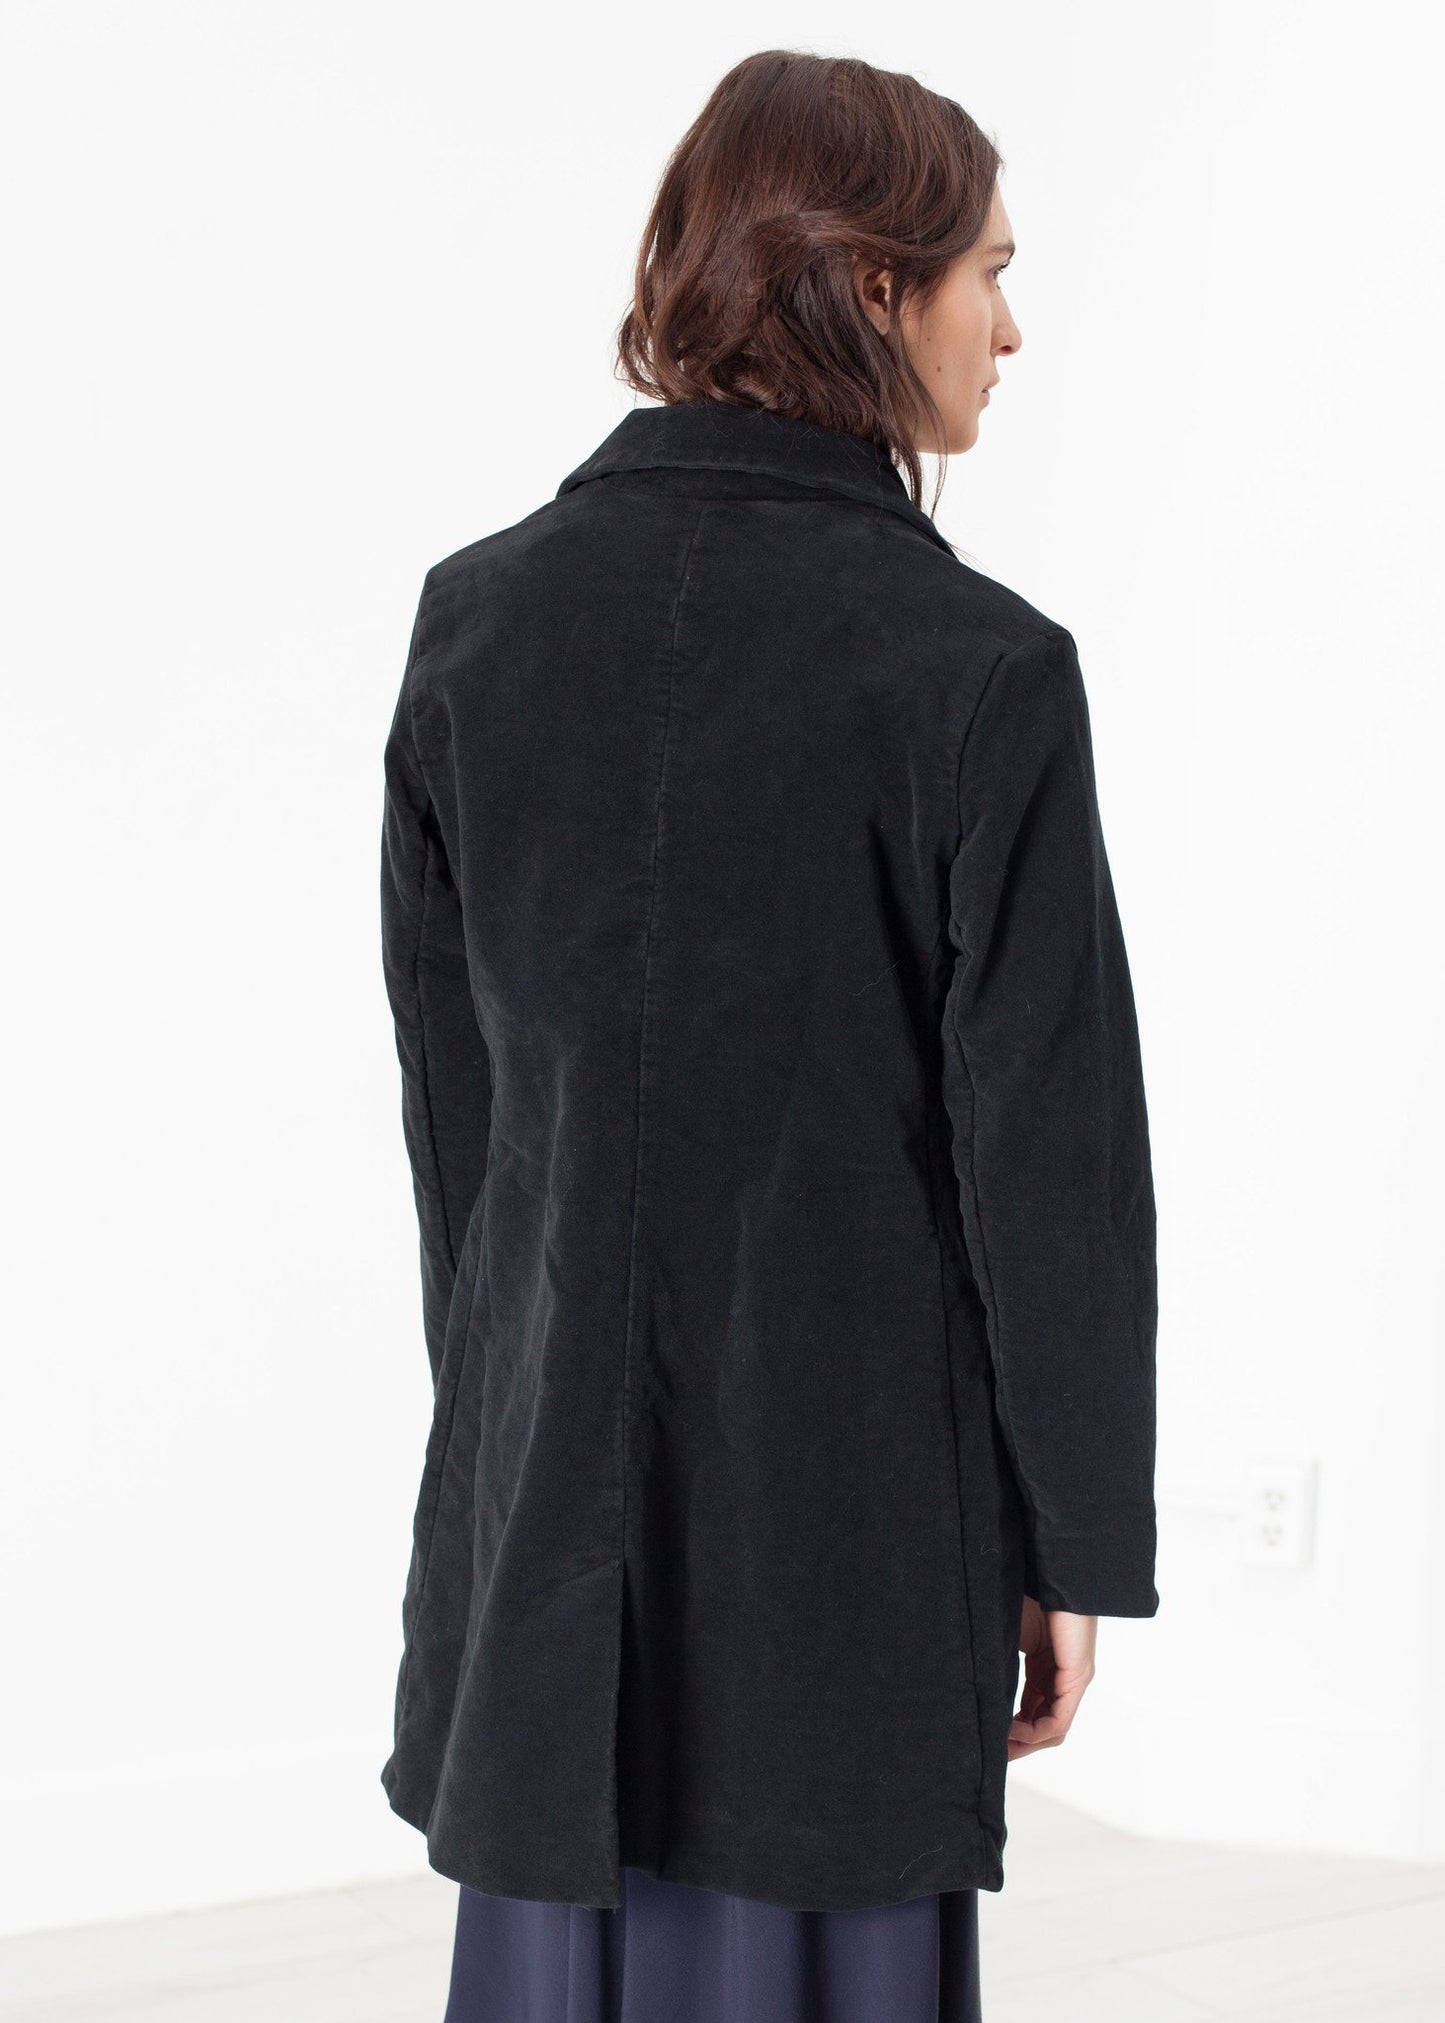 Griffon Coat in Black